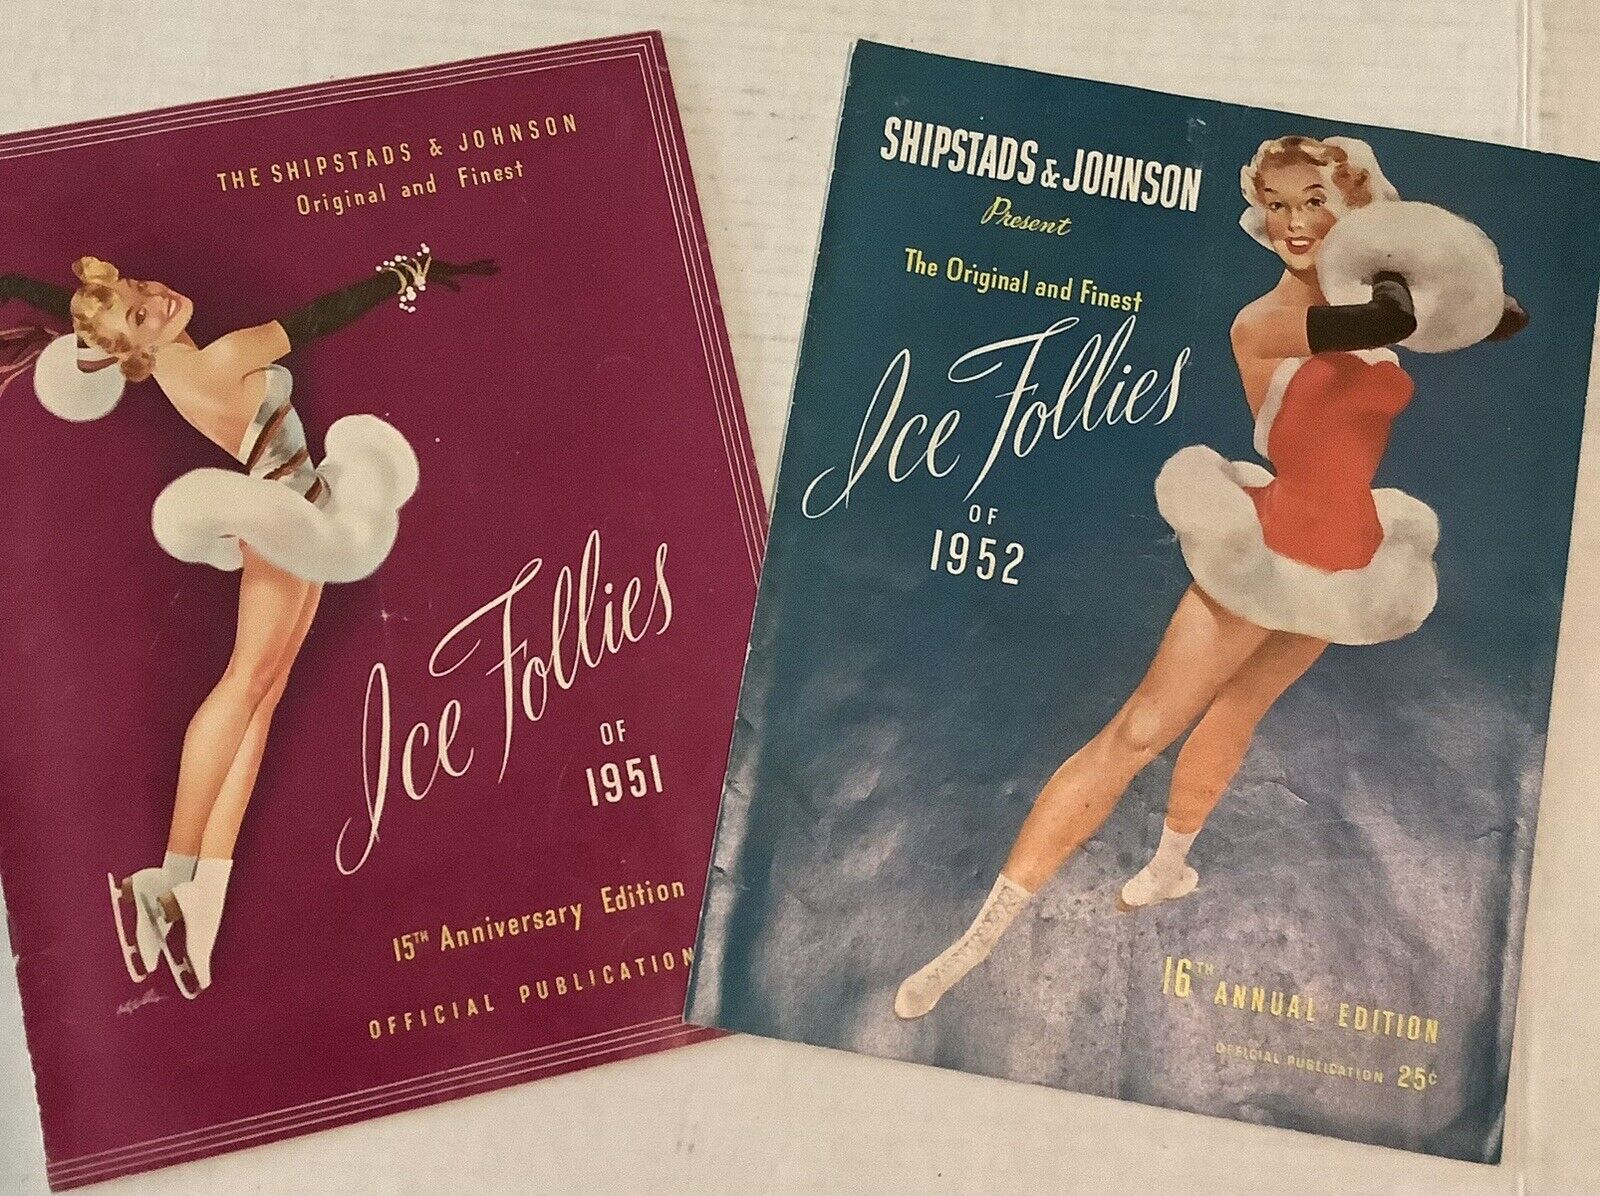 1951 & 1952 Ice Follies Official Publication Vintage Ephemera History